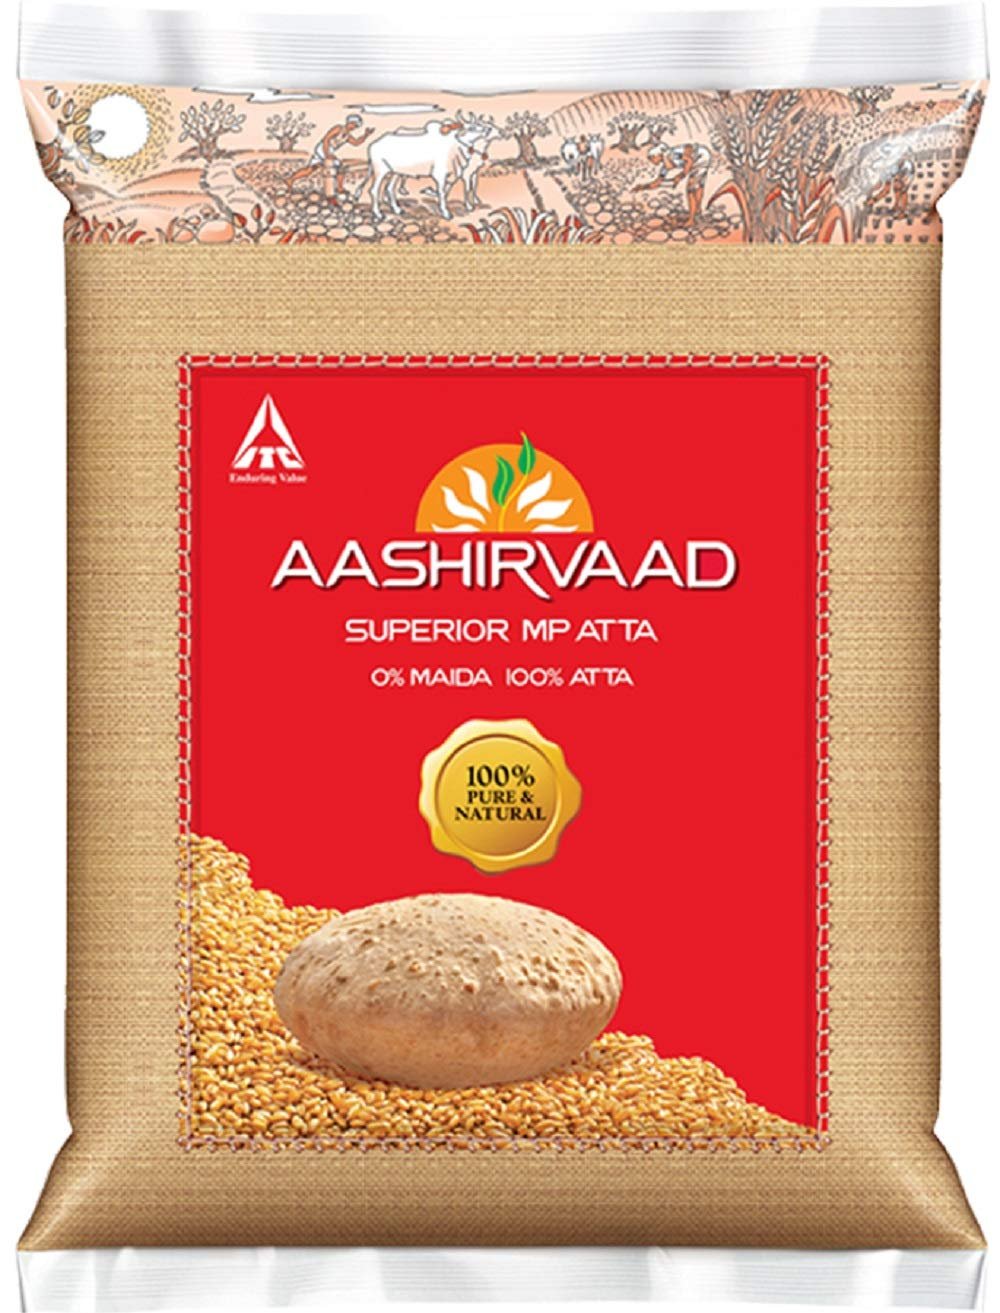 Aashirvaad Superior Atta (5kg) Money Saver Pack